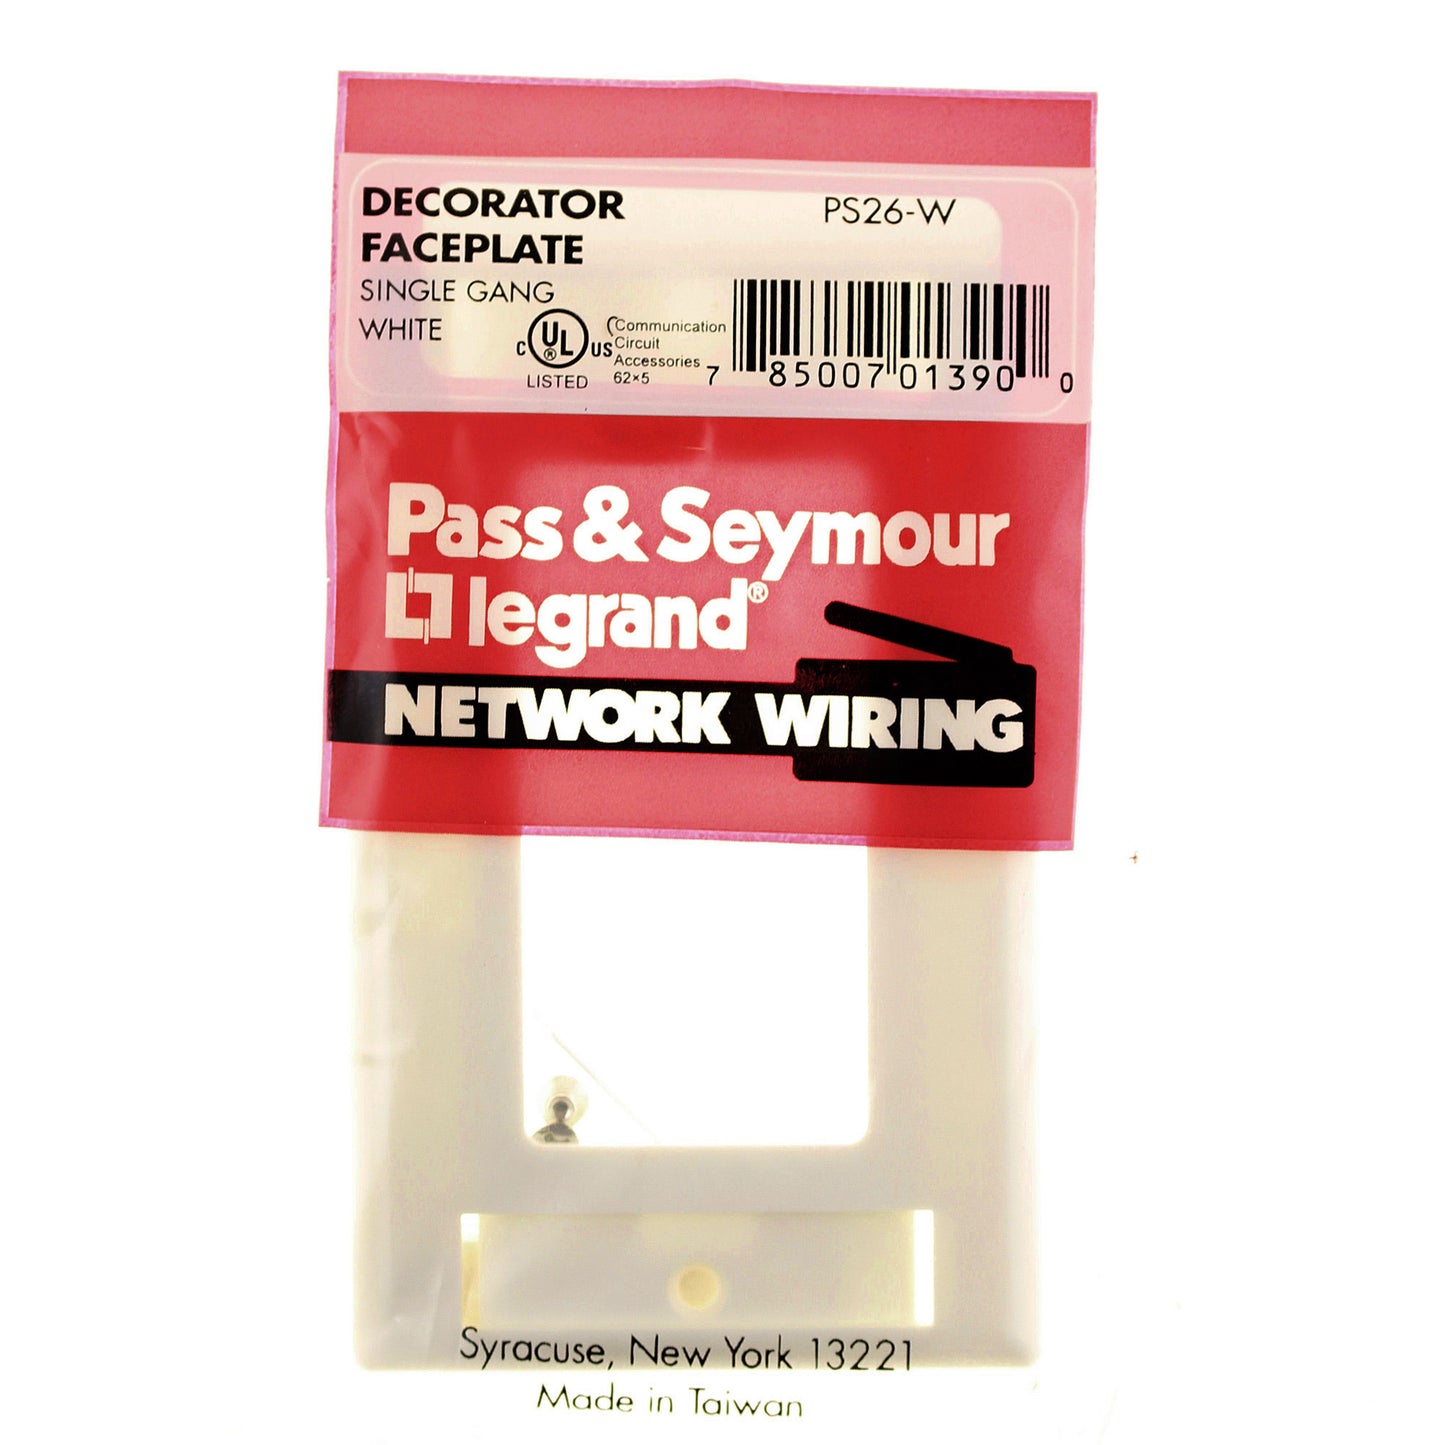 Pass & Seymour Legrand PS26-W